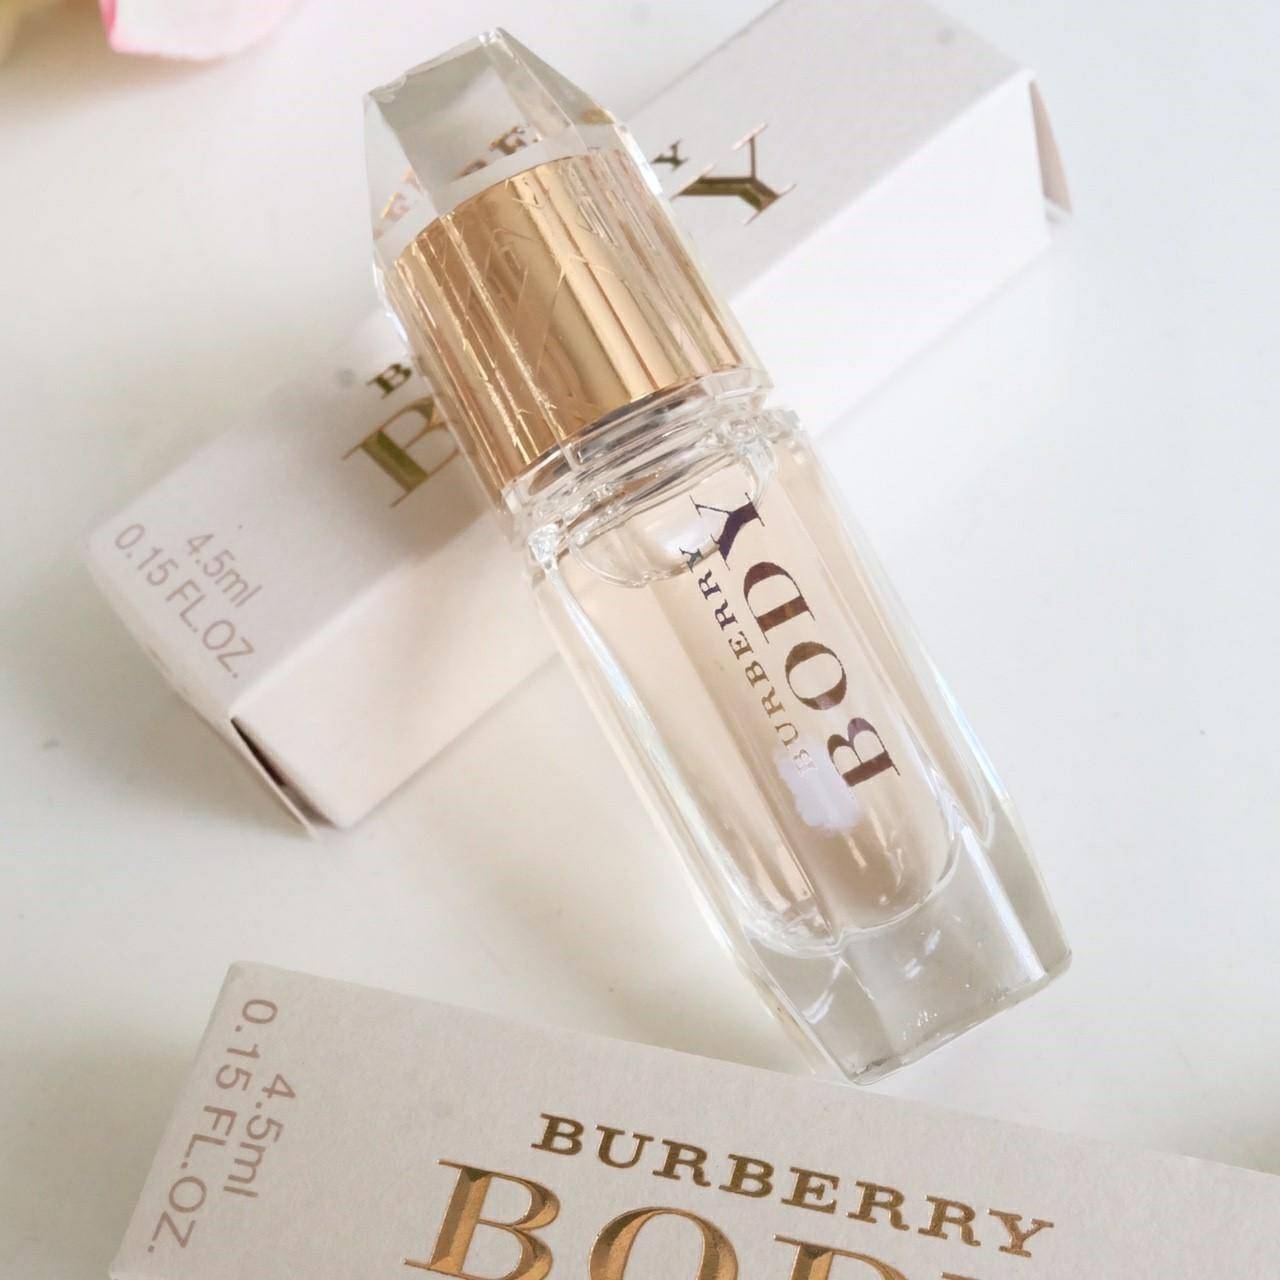 Burberry Body EDP For Women | My Perfume Shop Australia